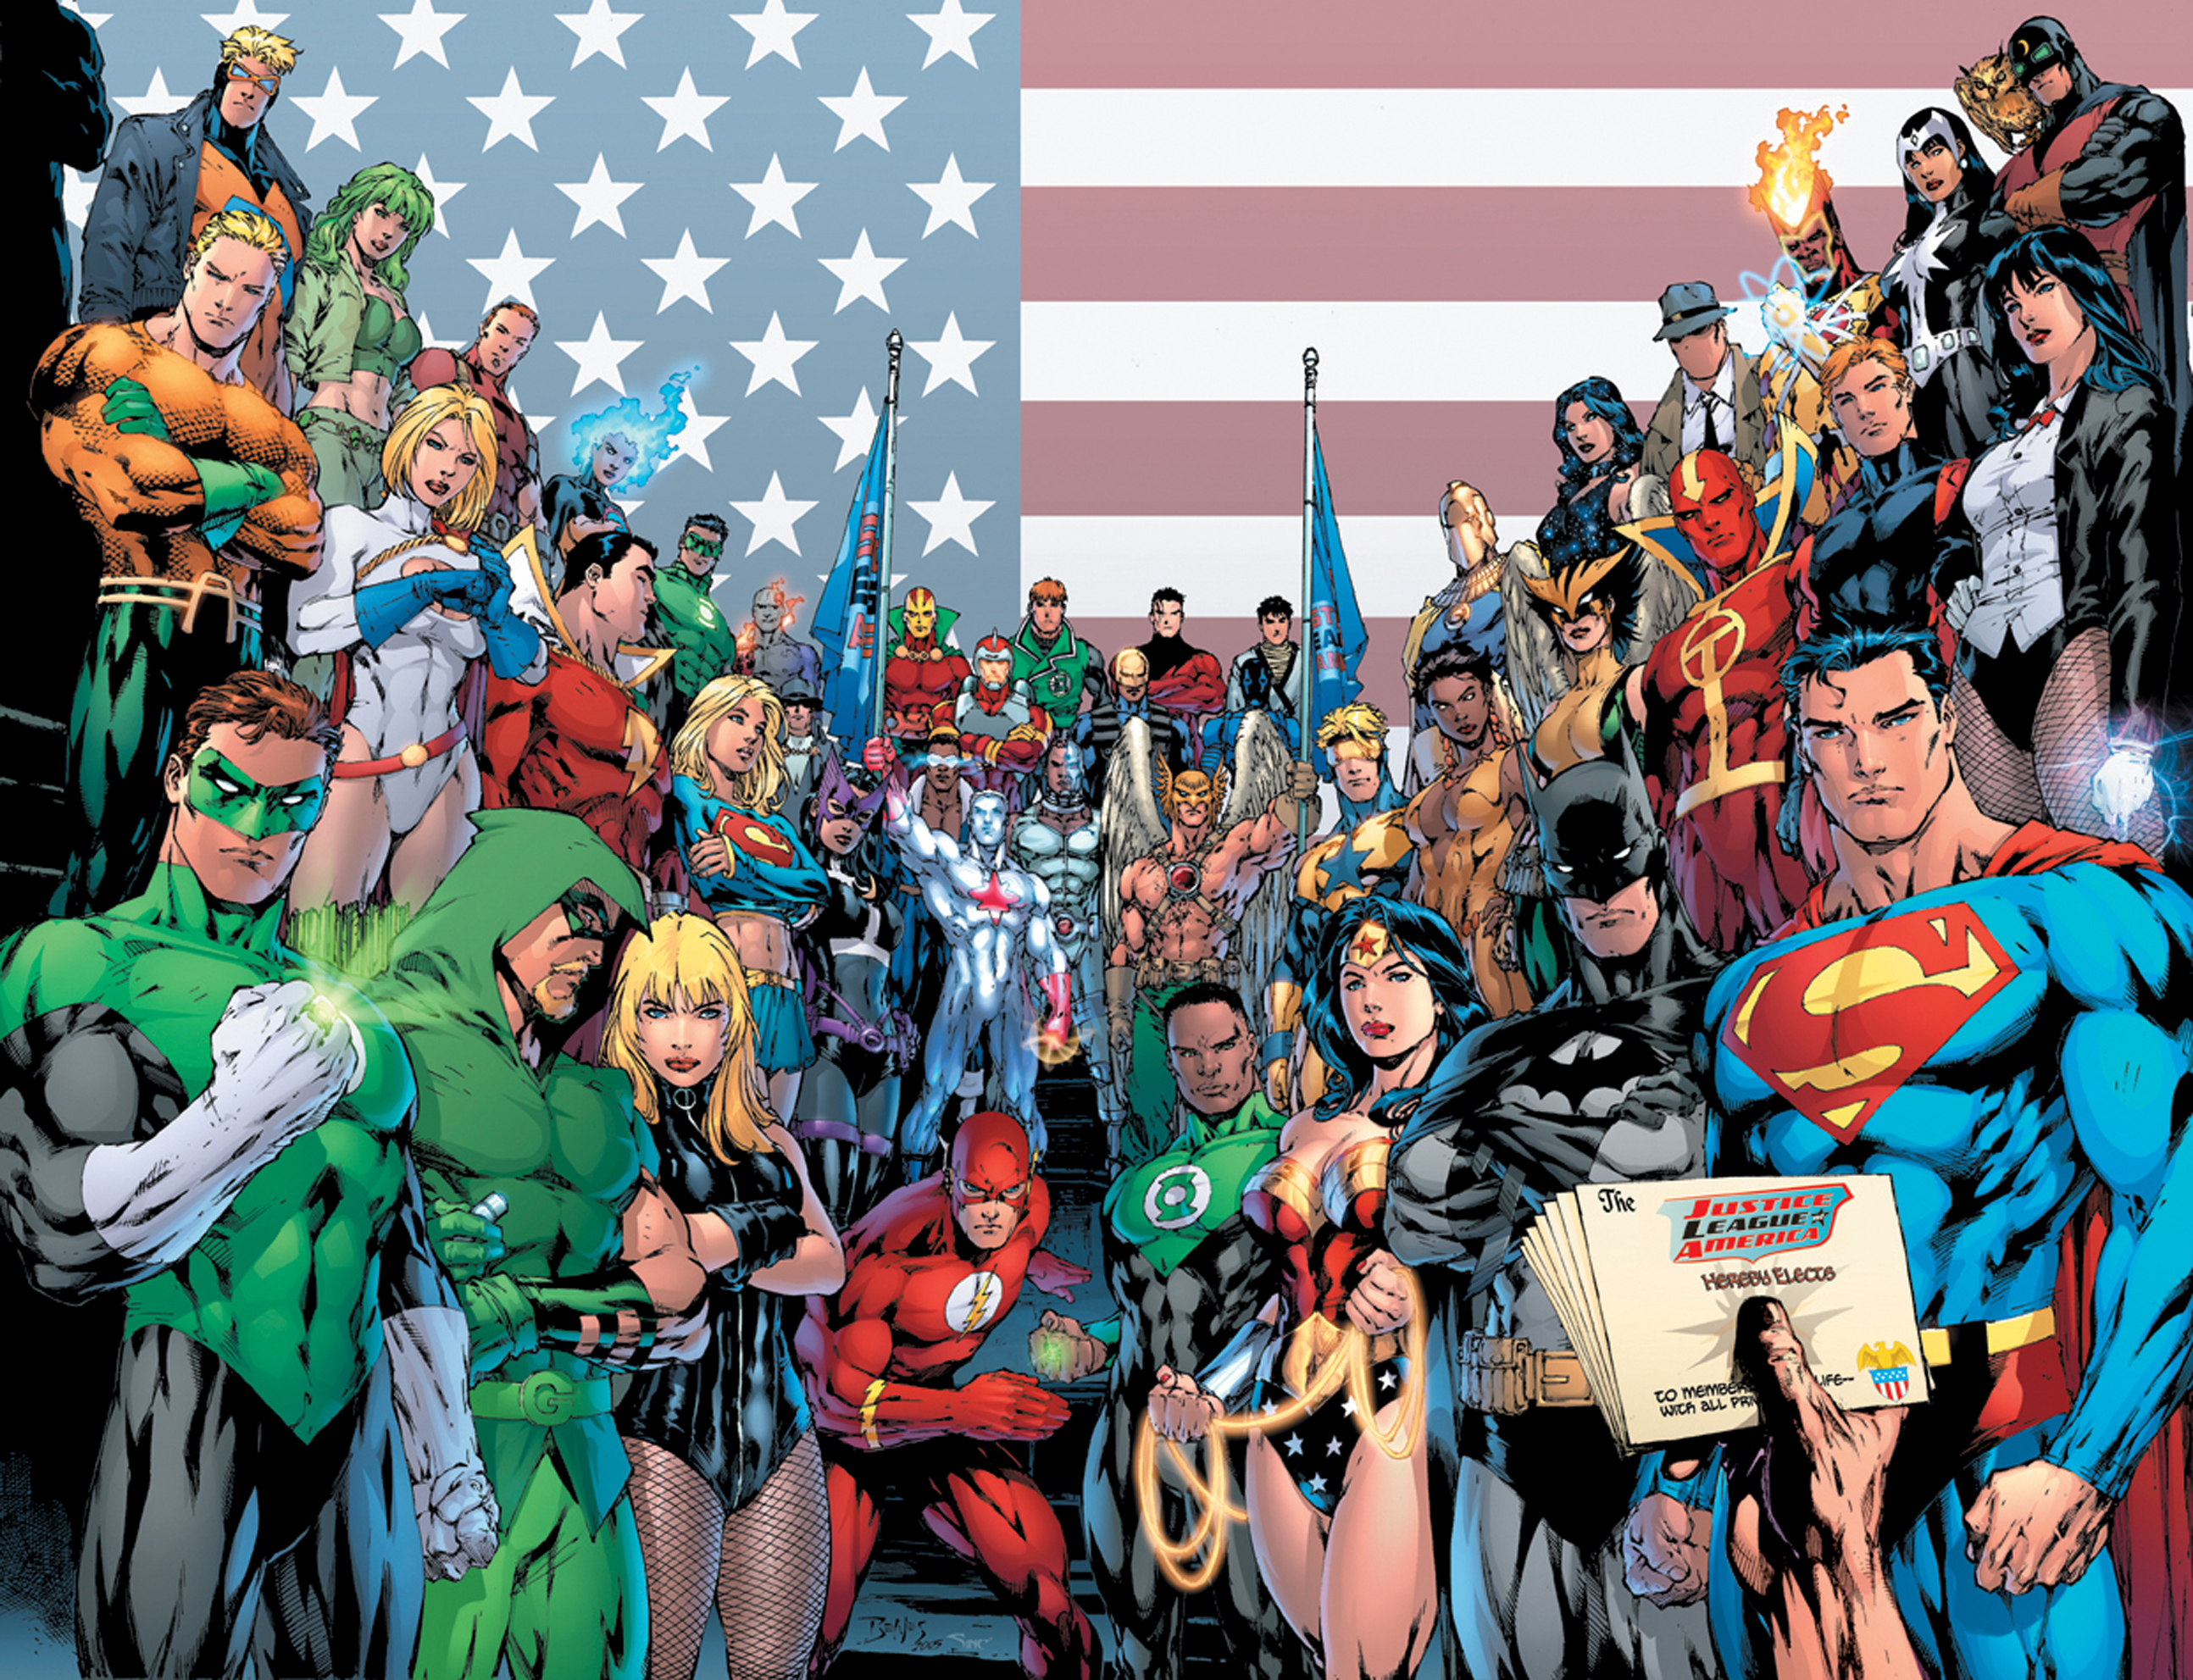 DC superheroes